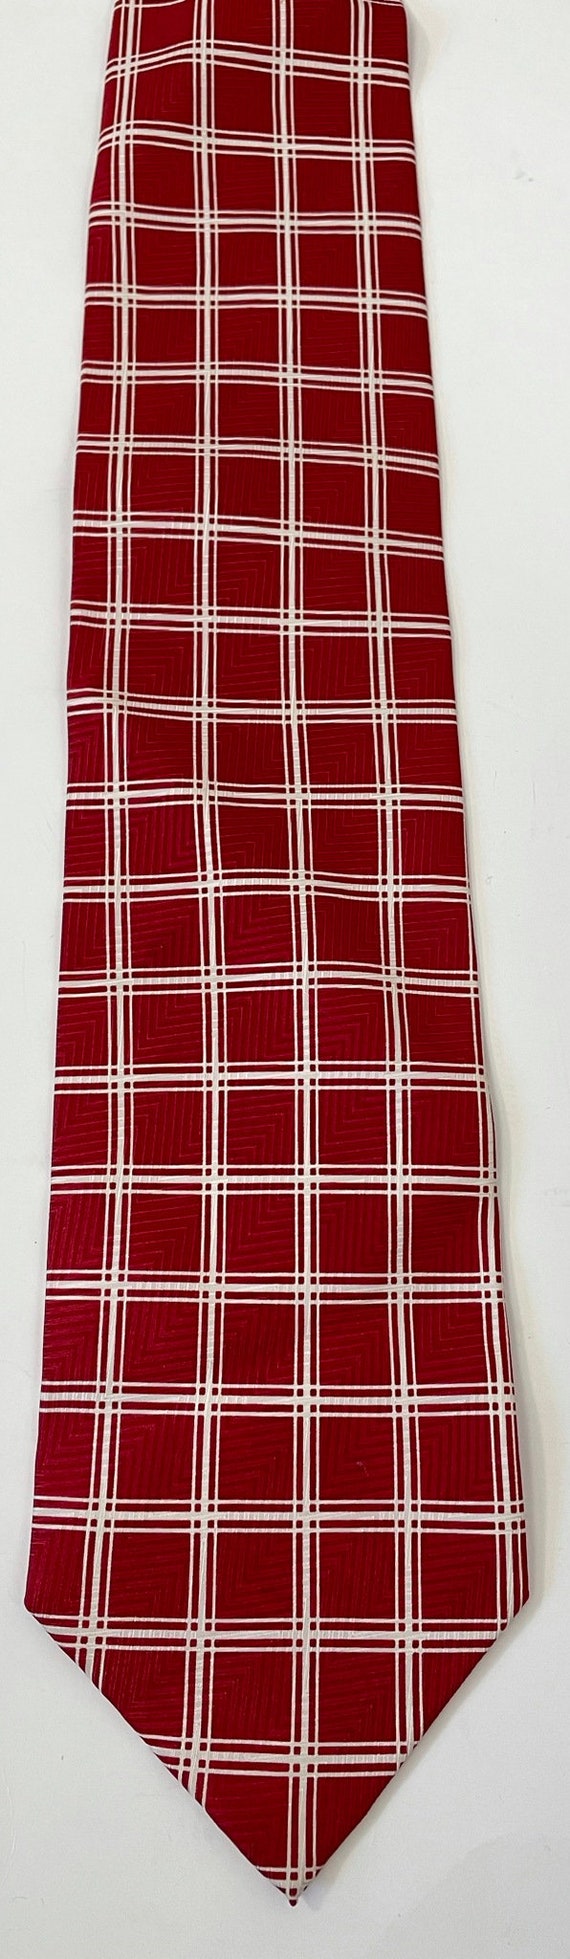 Vintage Red & White Plaid Tie, Handmade Classic Pl